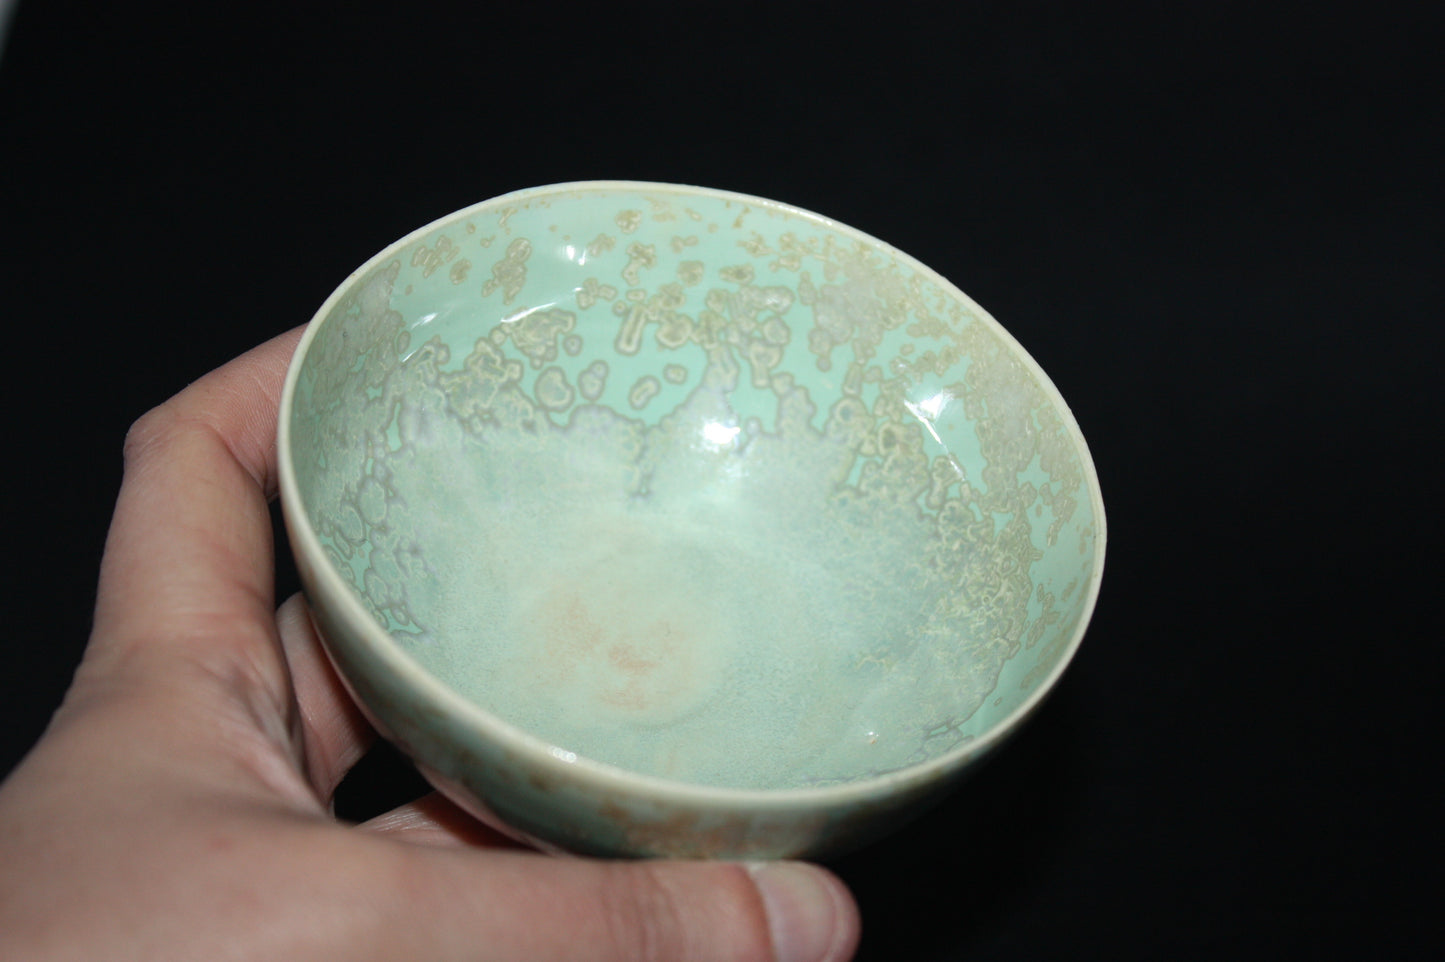 Small bowl, Lagon vert